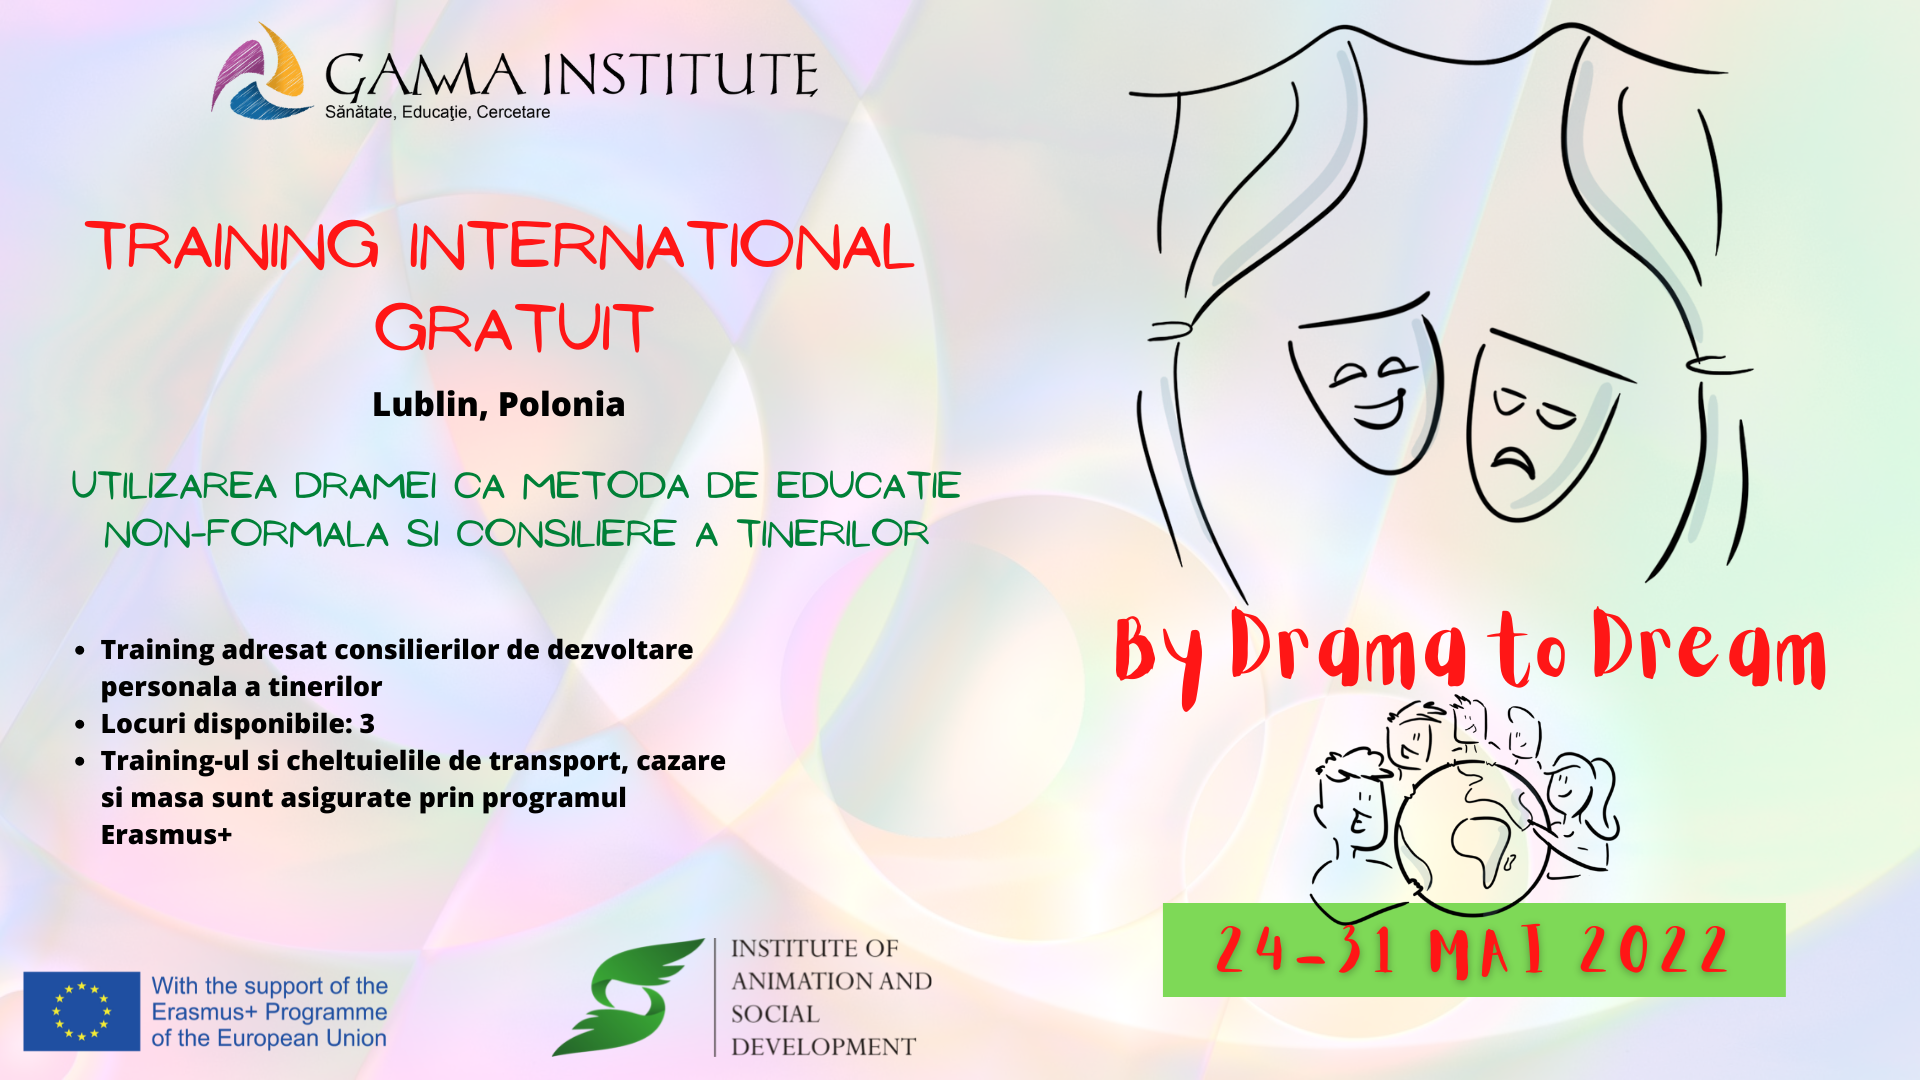 by_drama_to_dream_gamma_institute.png